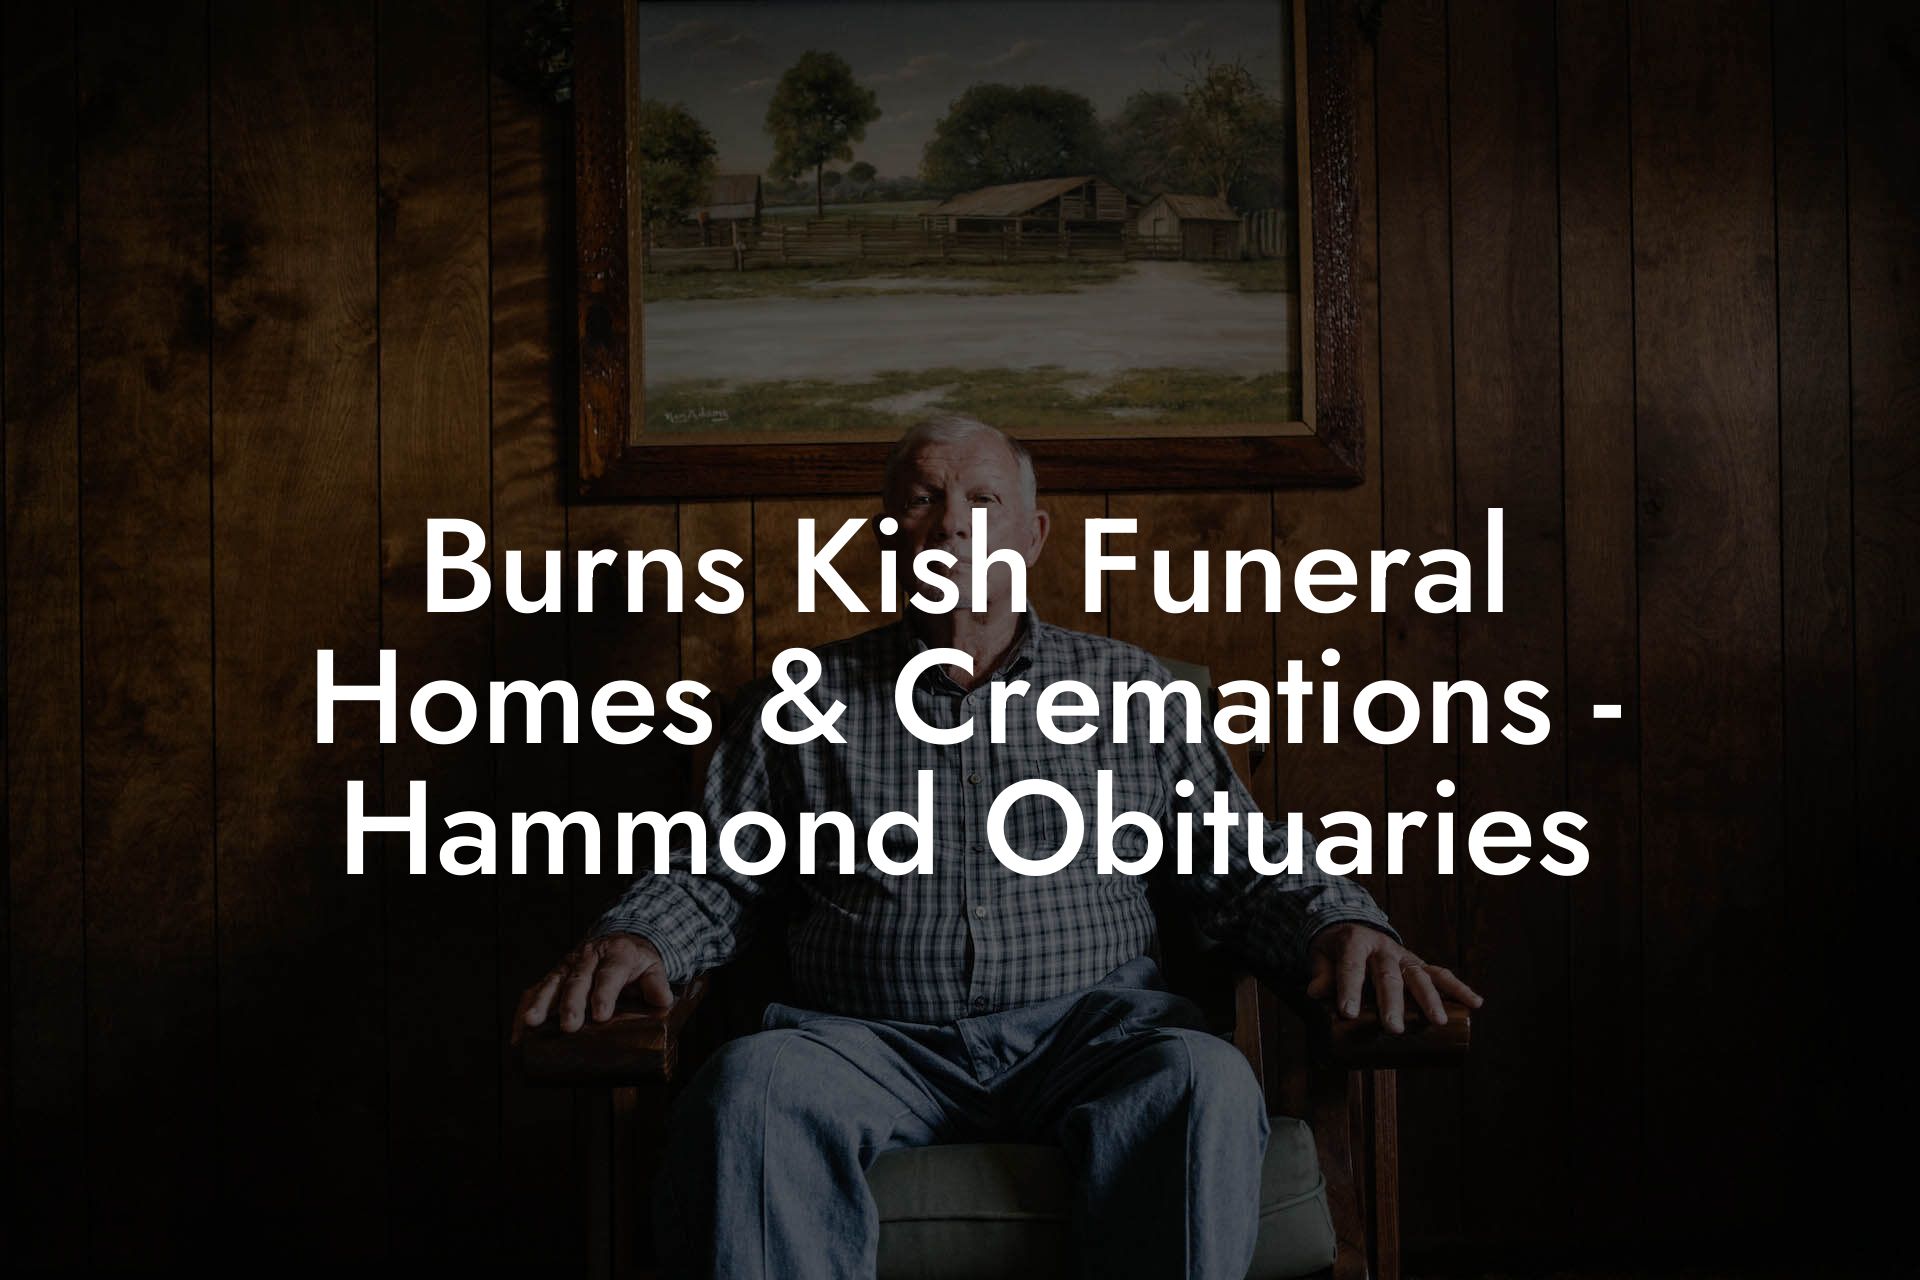 Burns Kish Funeral Homes & Cremations - Hammond Obituaries